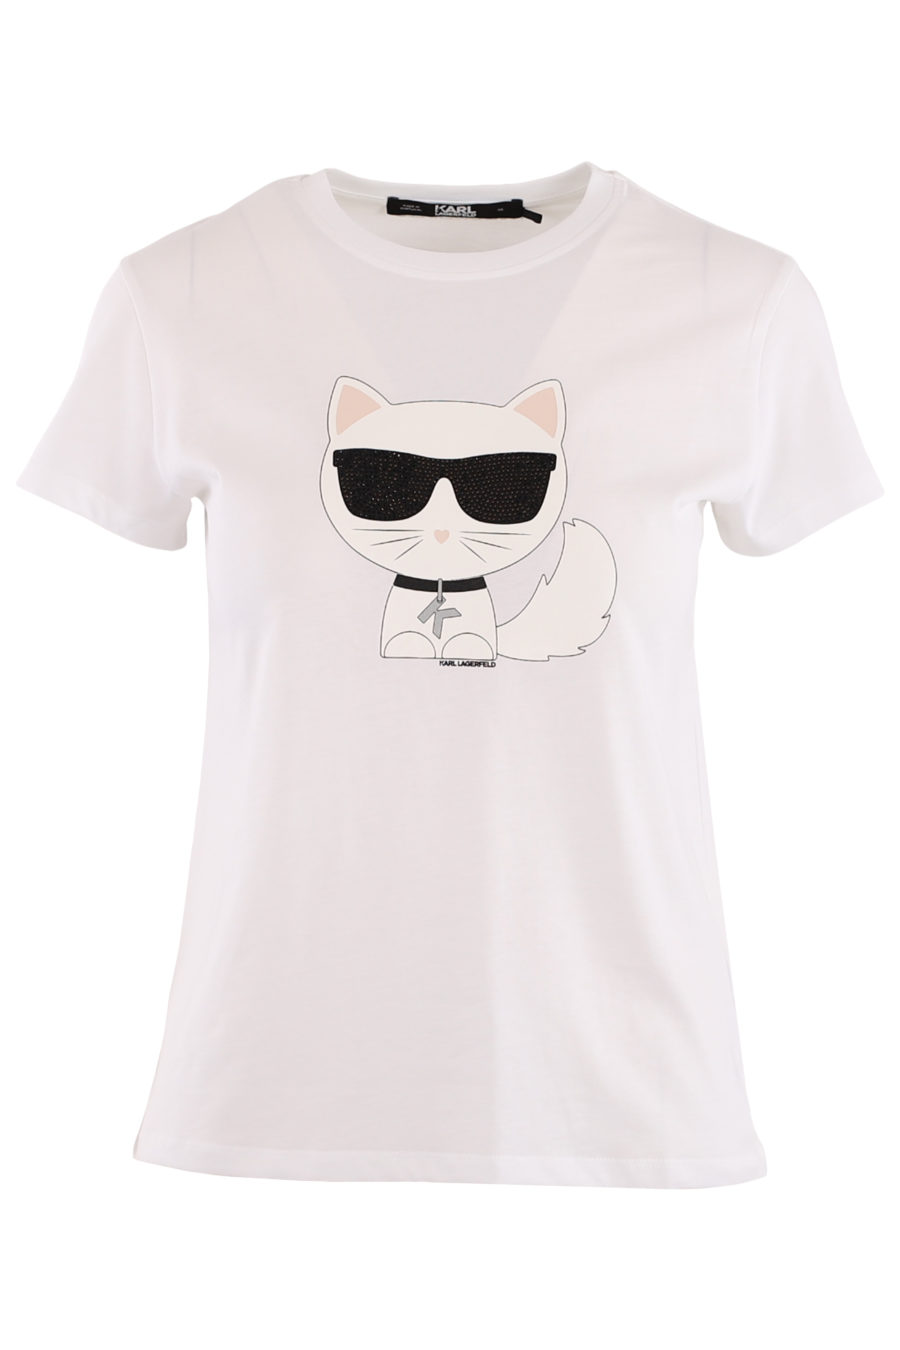 White T-shirt with "Choupette" - fe6a02ef789e9e0e096d4ba05e5e0a595cda09e92b